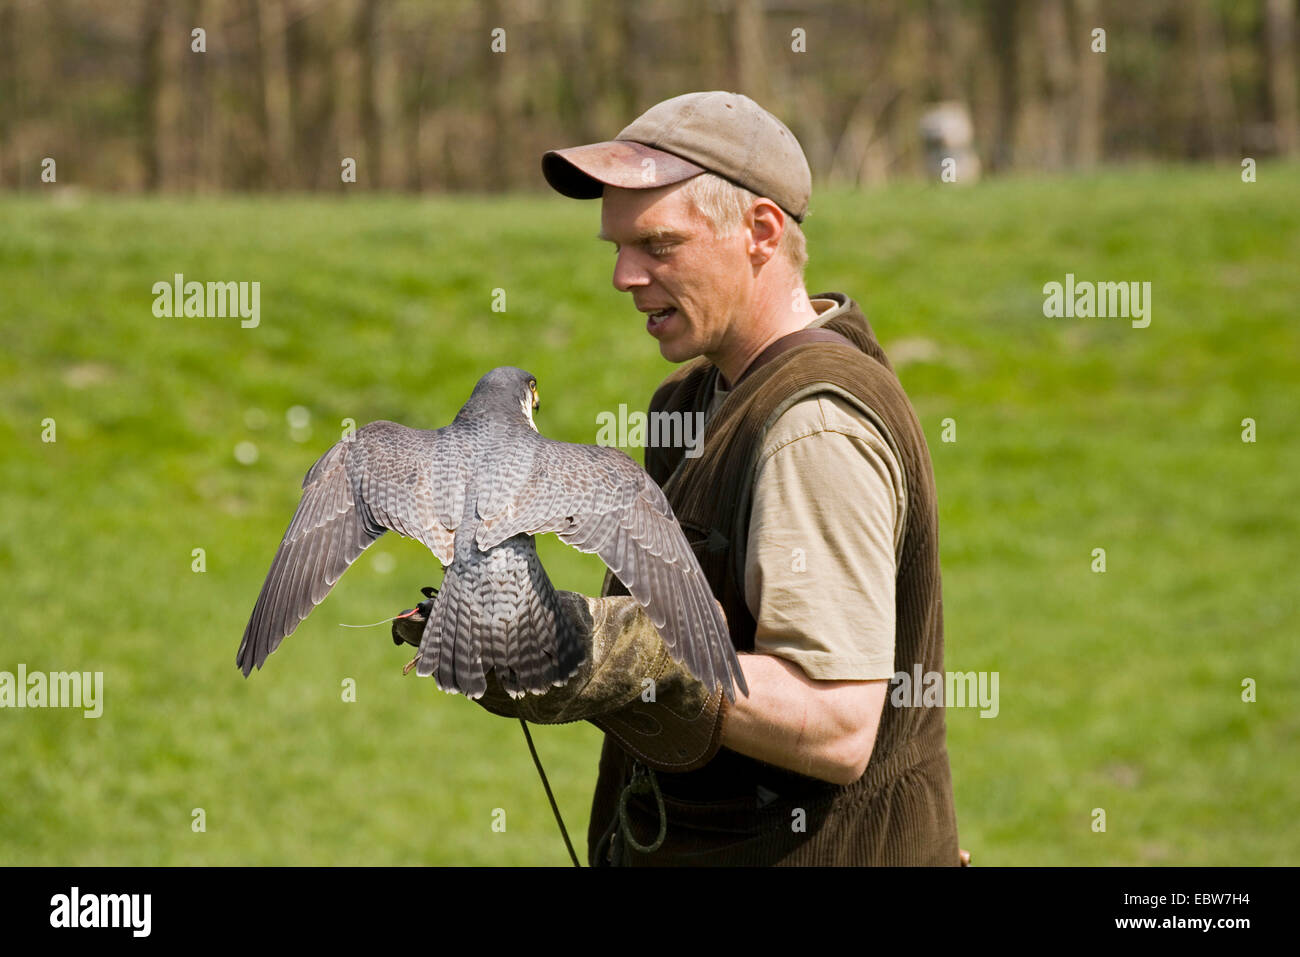 peregrine falcon (Falco peregrinus), Show bird of prey Stock Photo